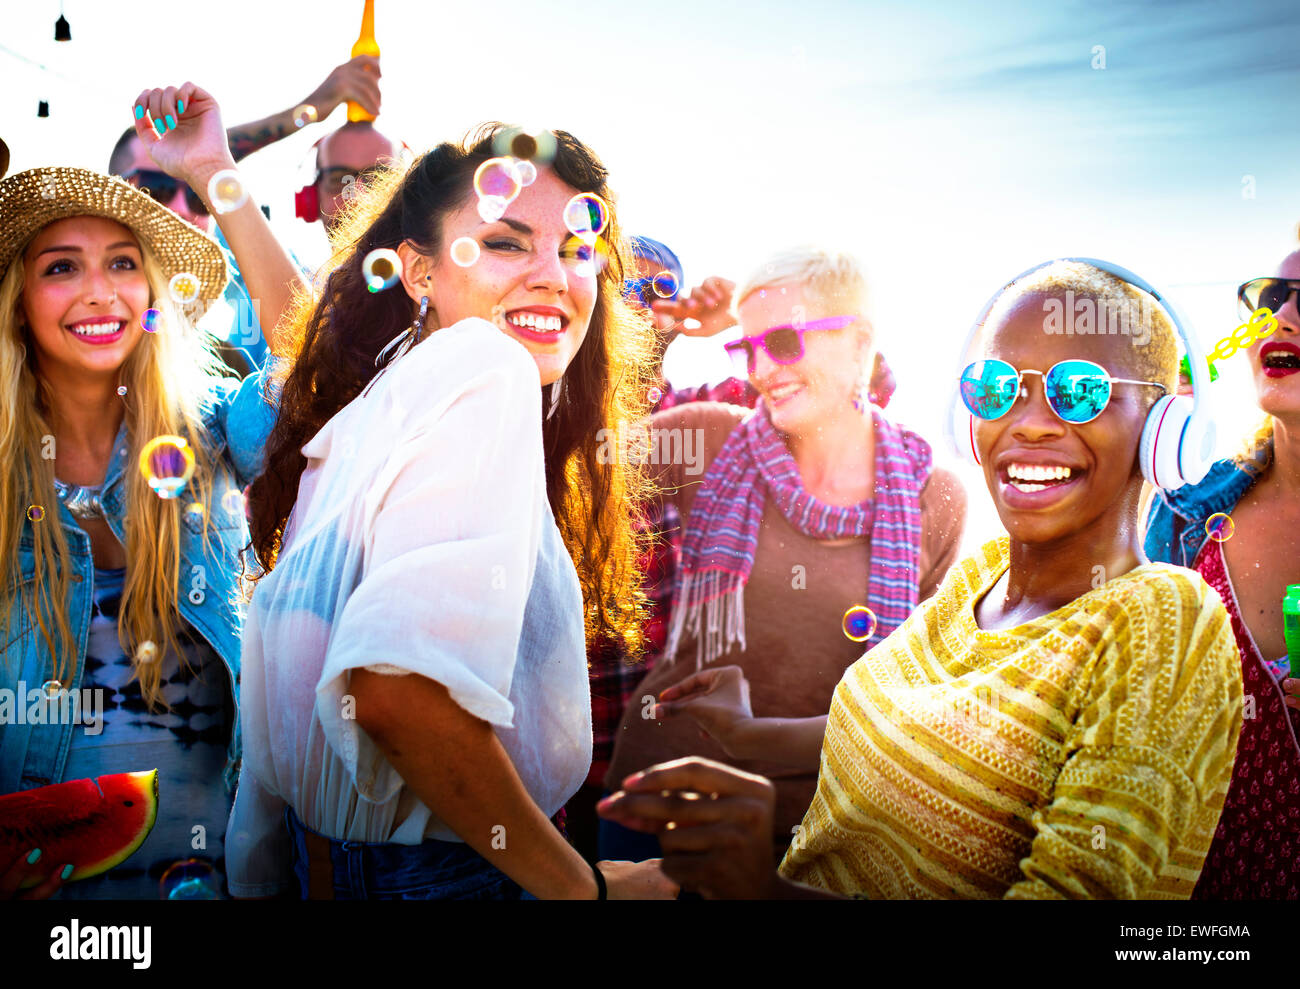 Diversity Dancing Beach Party Celebration Concept Stock Photo - Alamy